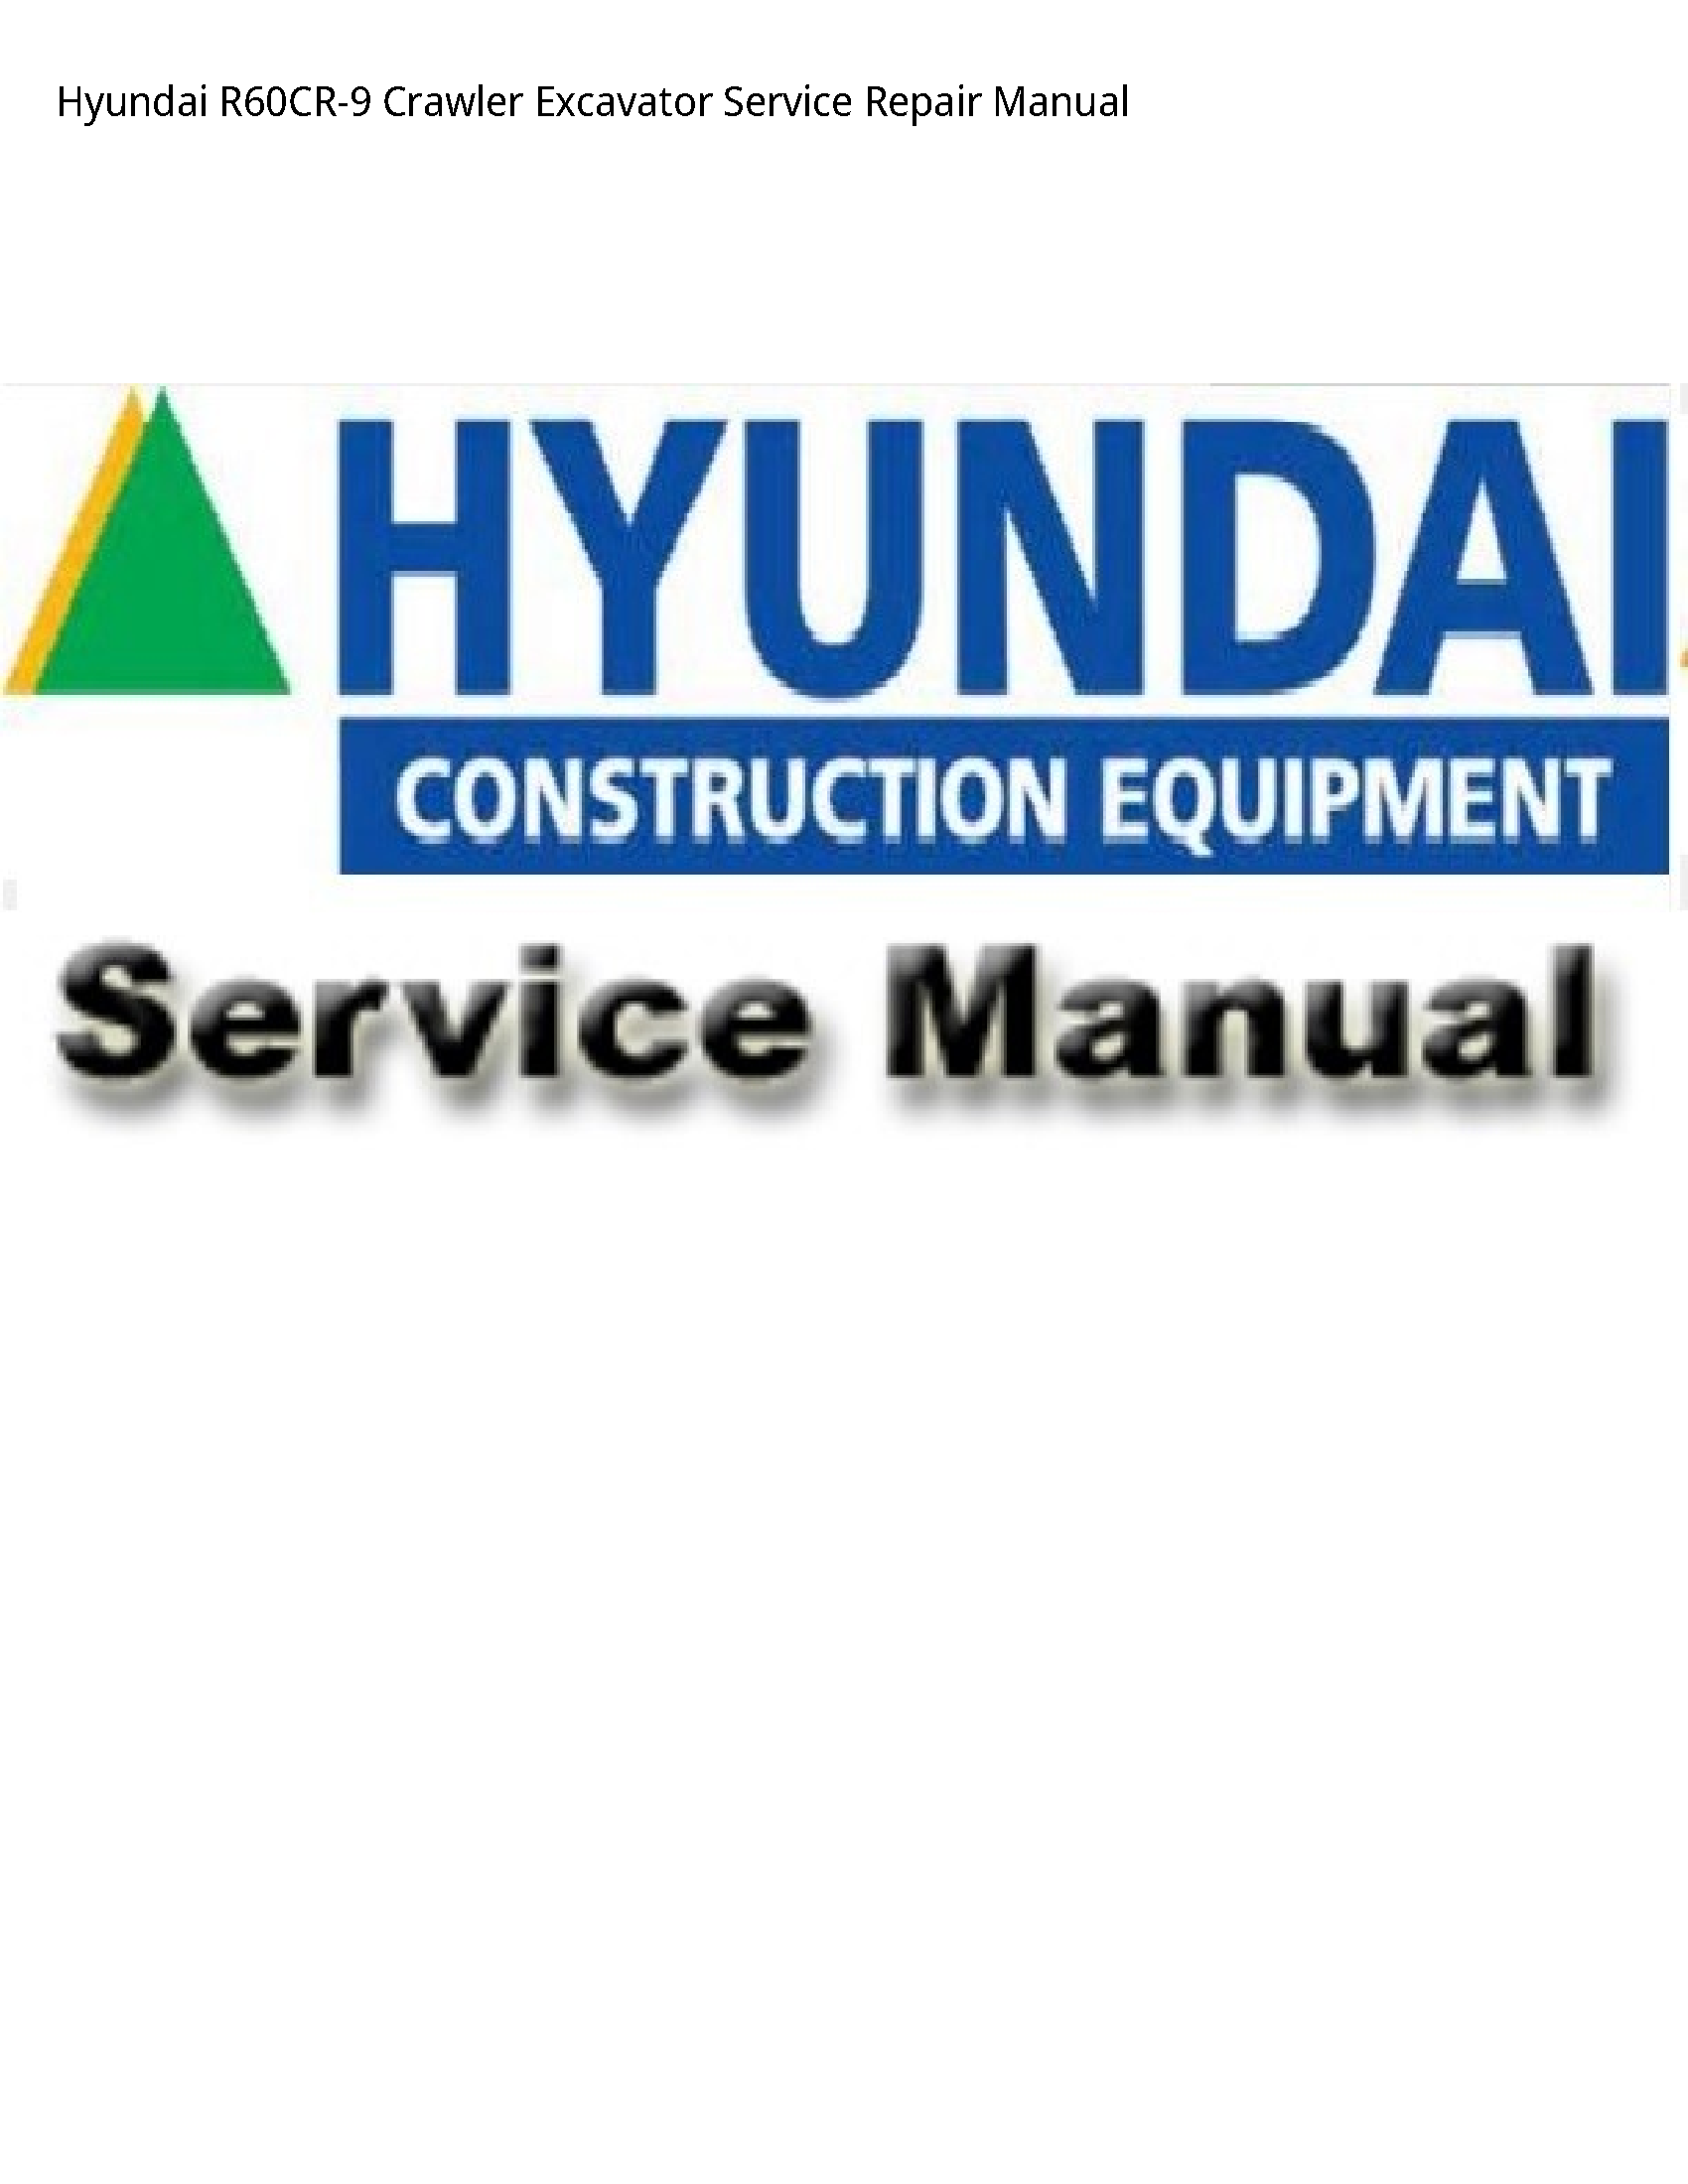 Hyundai R60CR-9 Crawler Excavator manual